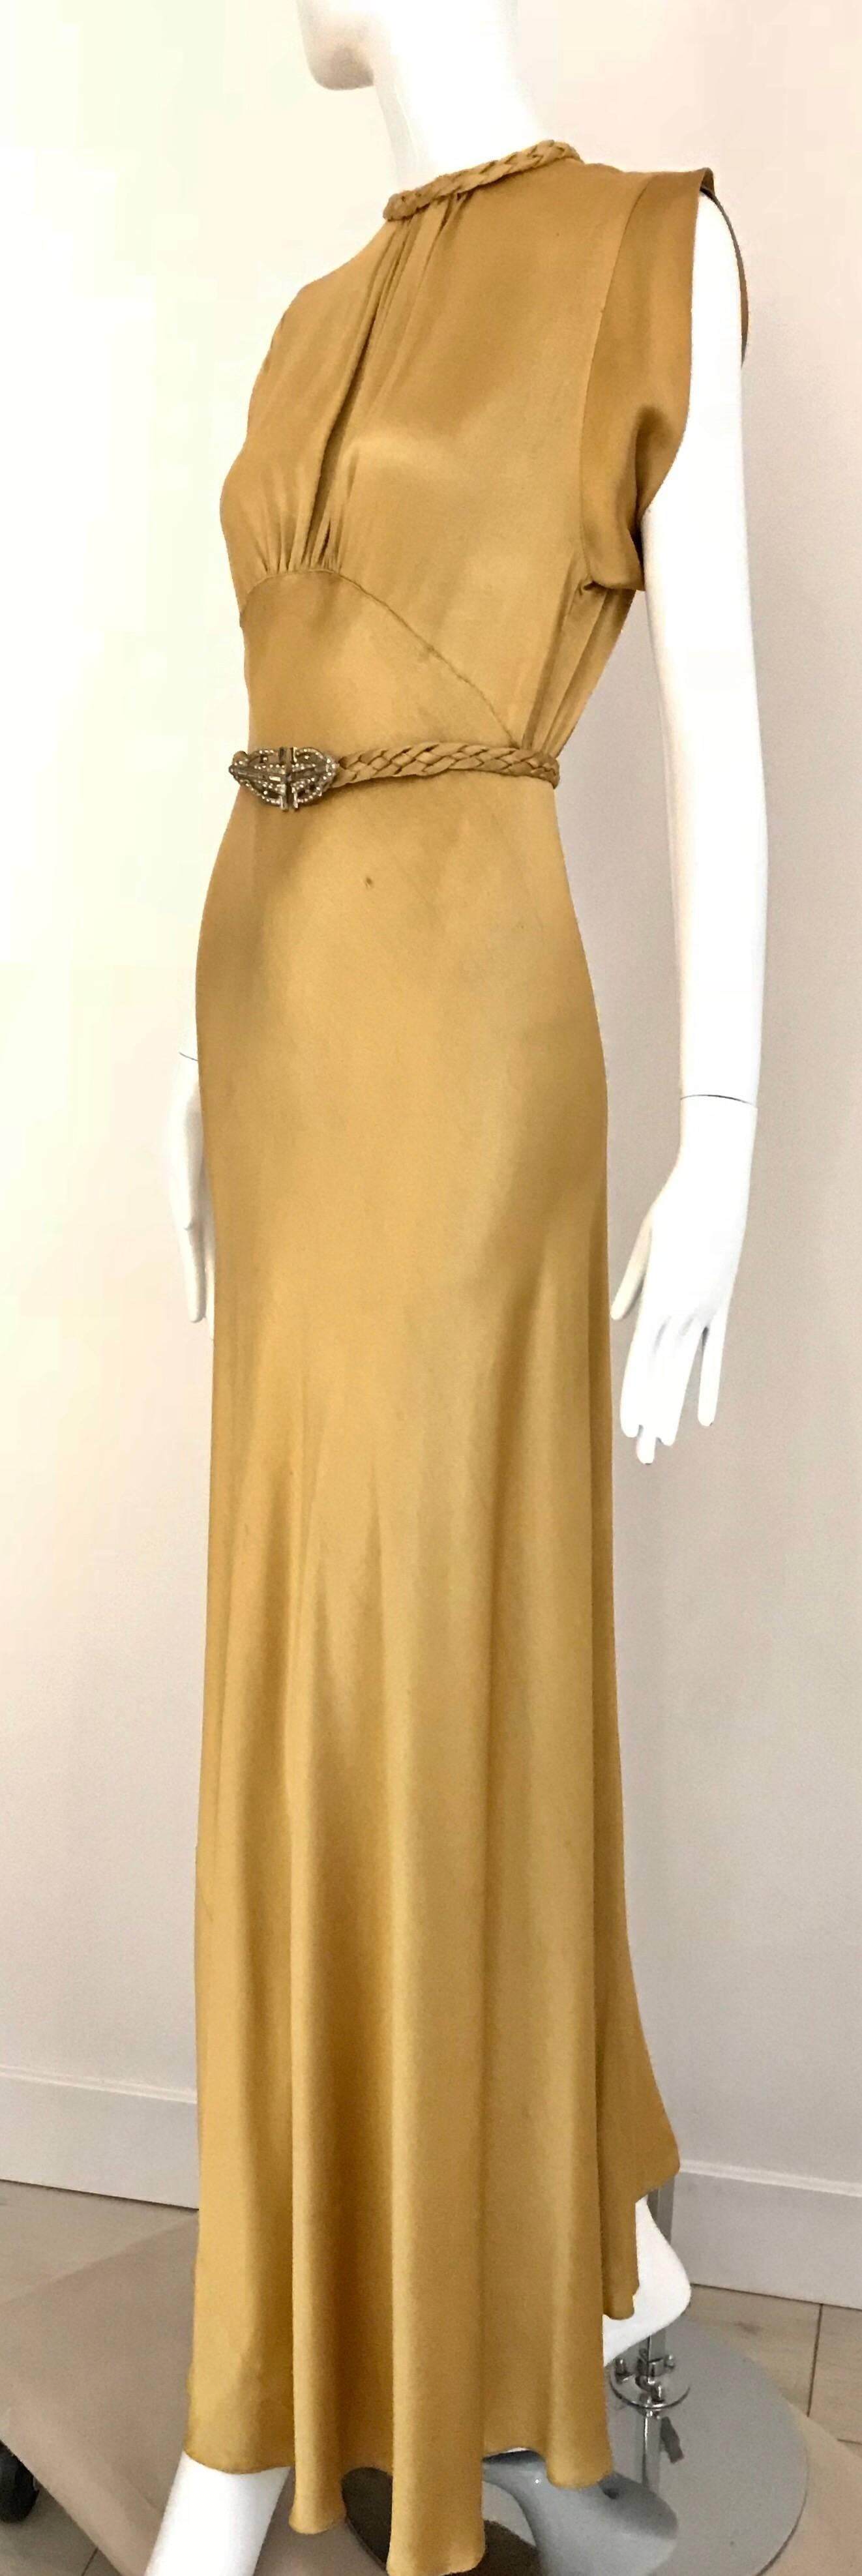 1930s hollywood dress